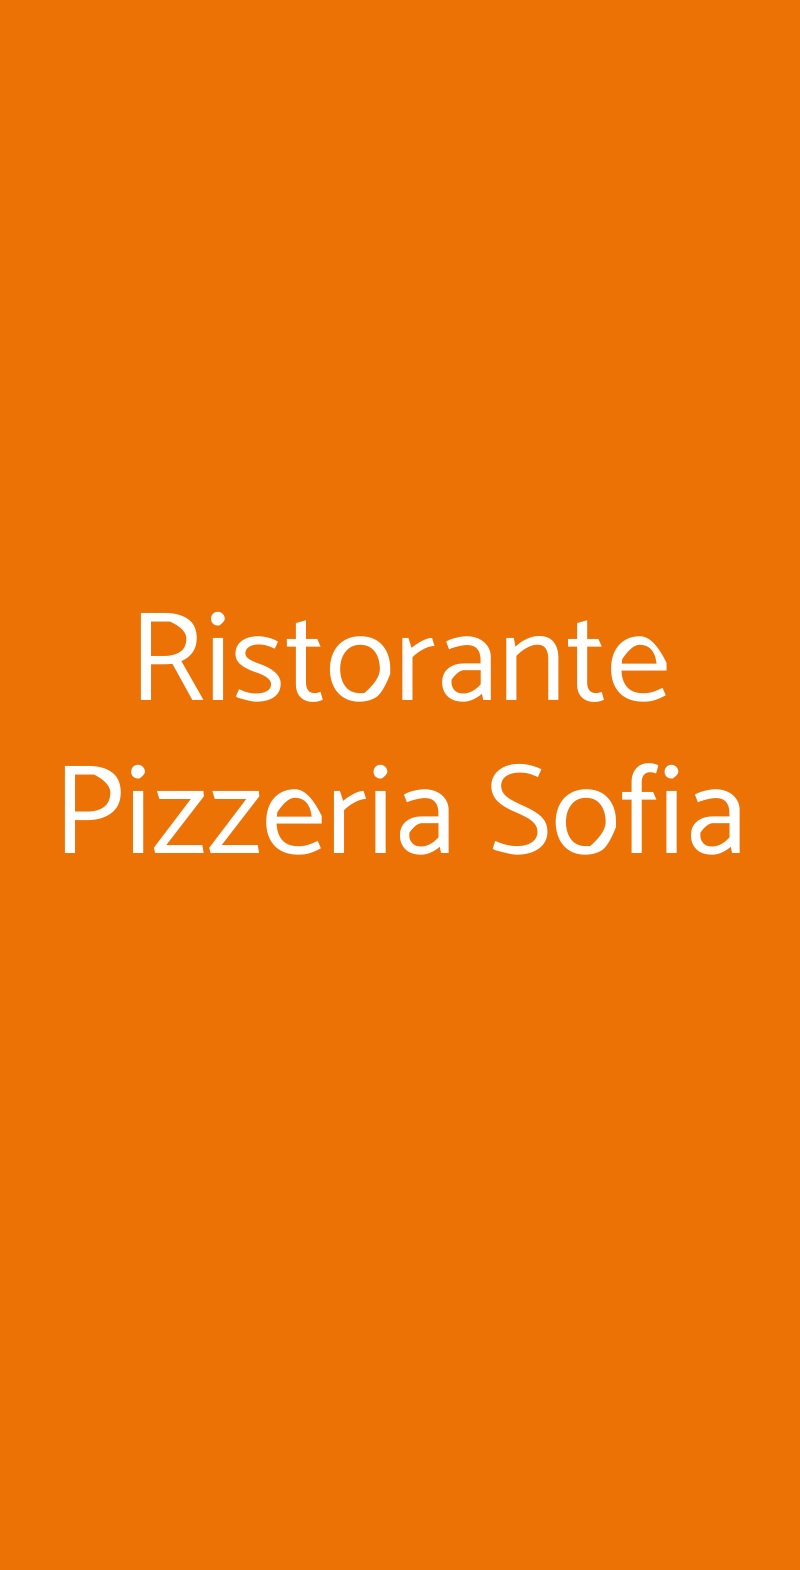 Ristorante Pizzeria Sofia Roma menù 1 pagina